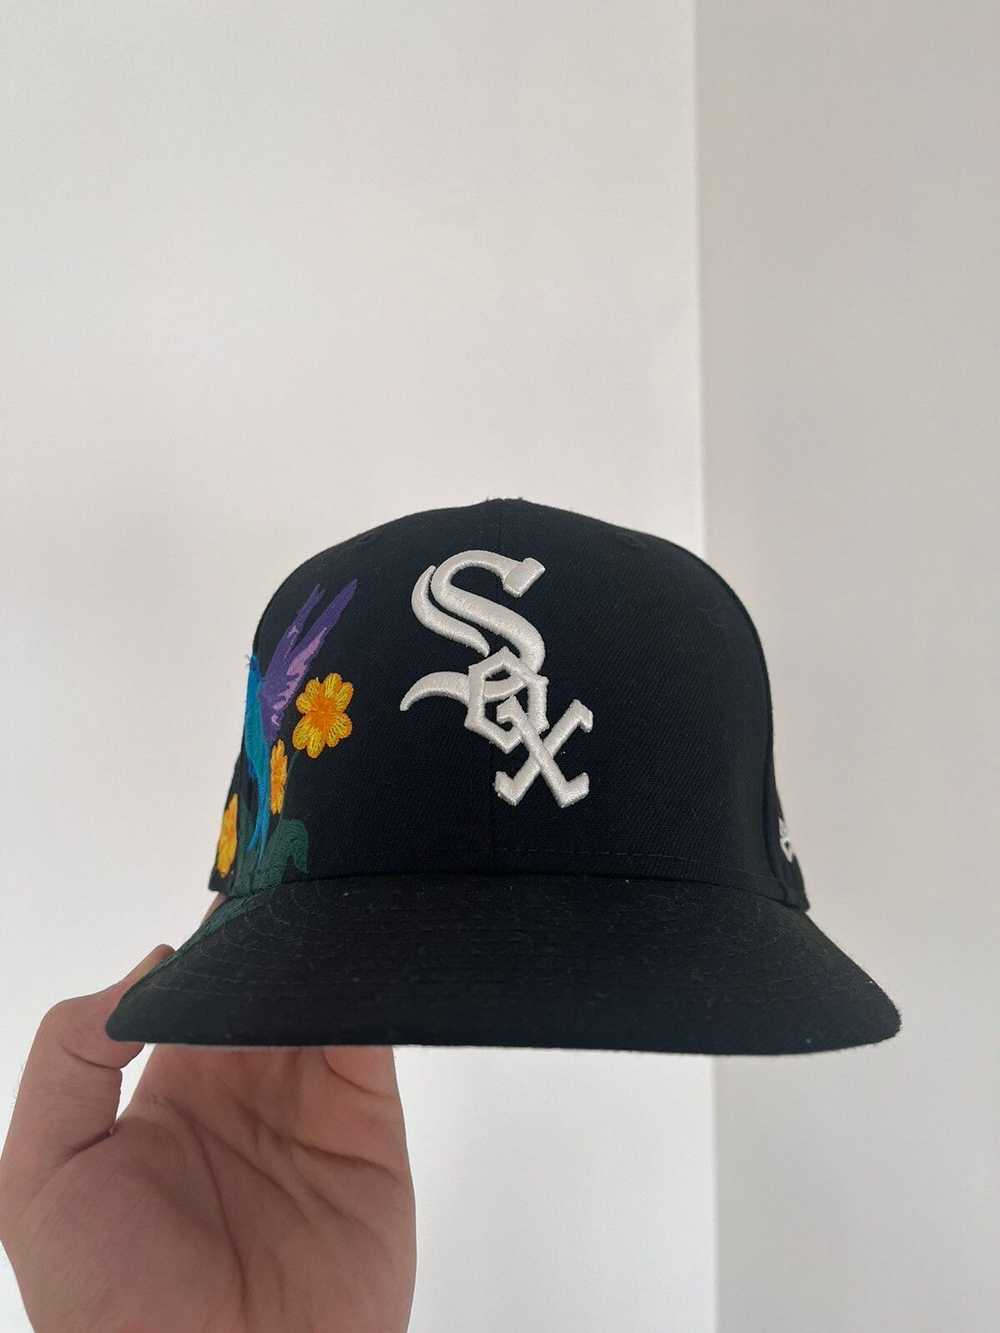 New Era Black Sox Floral hat - image 4